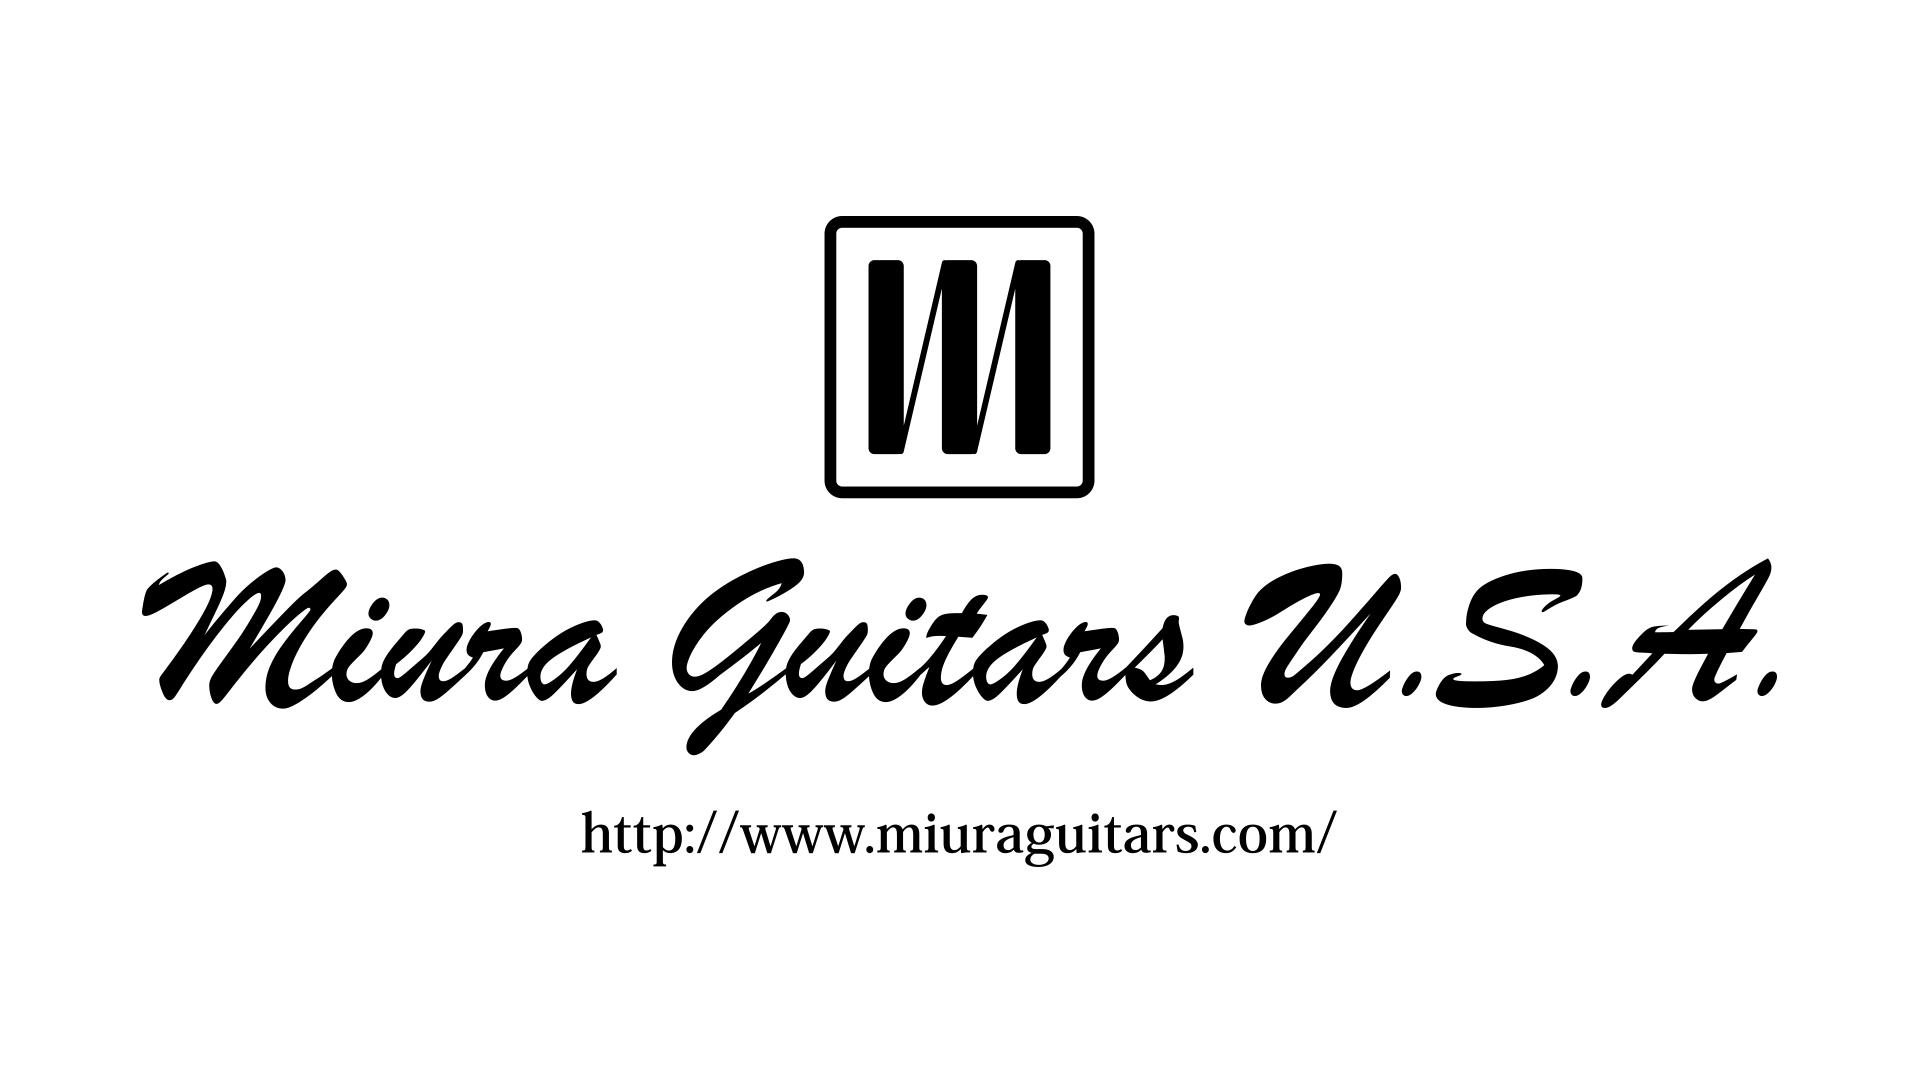 Miura Guitars Official Website, Renewed